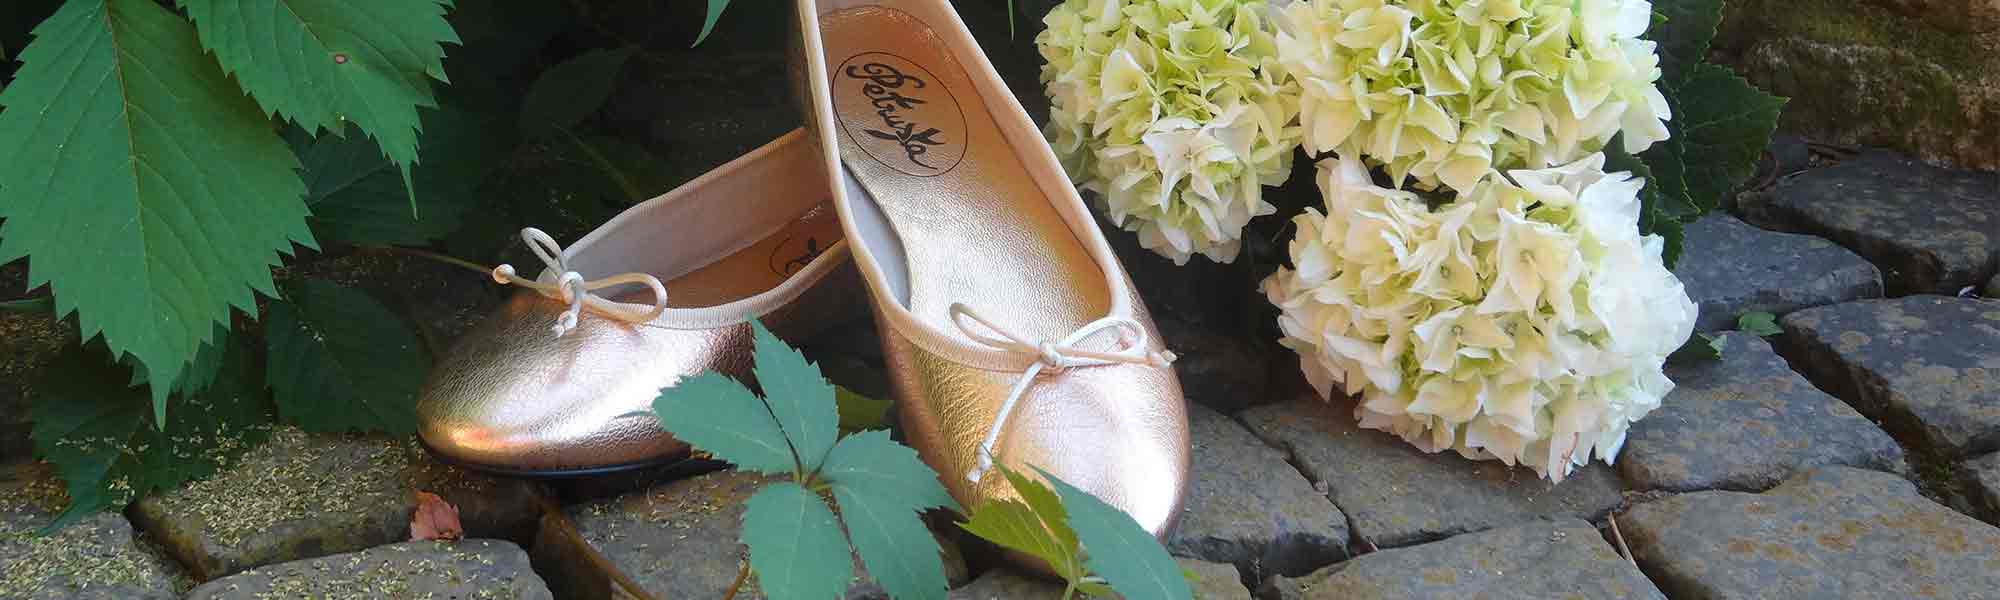 Ballerinas Ballerina Schuhe Stiefel Boots In Leder Und Fell By Petruska